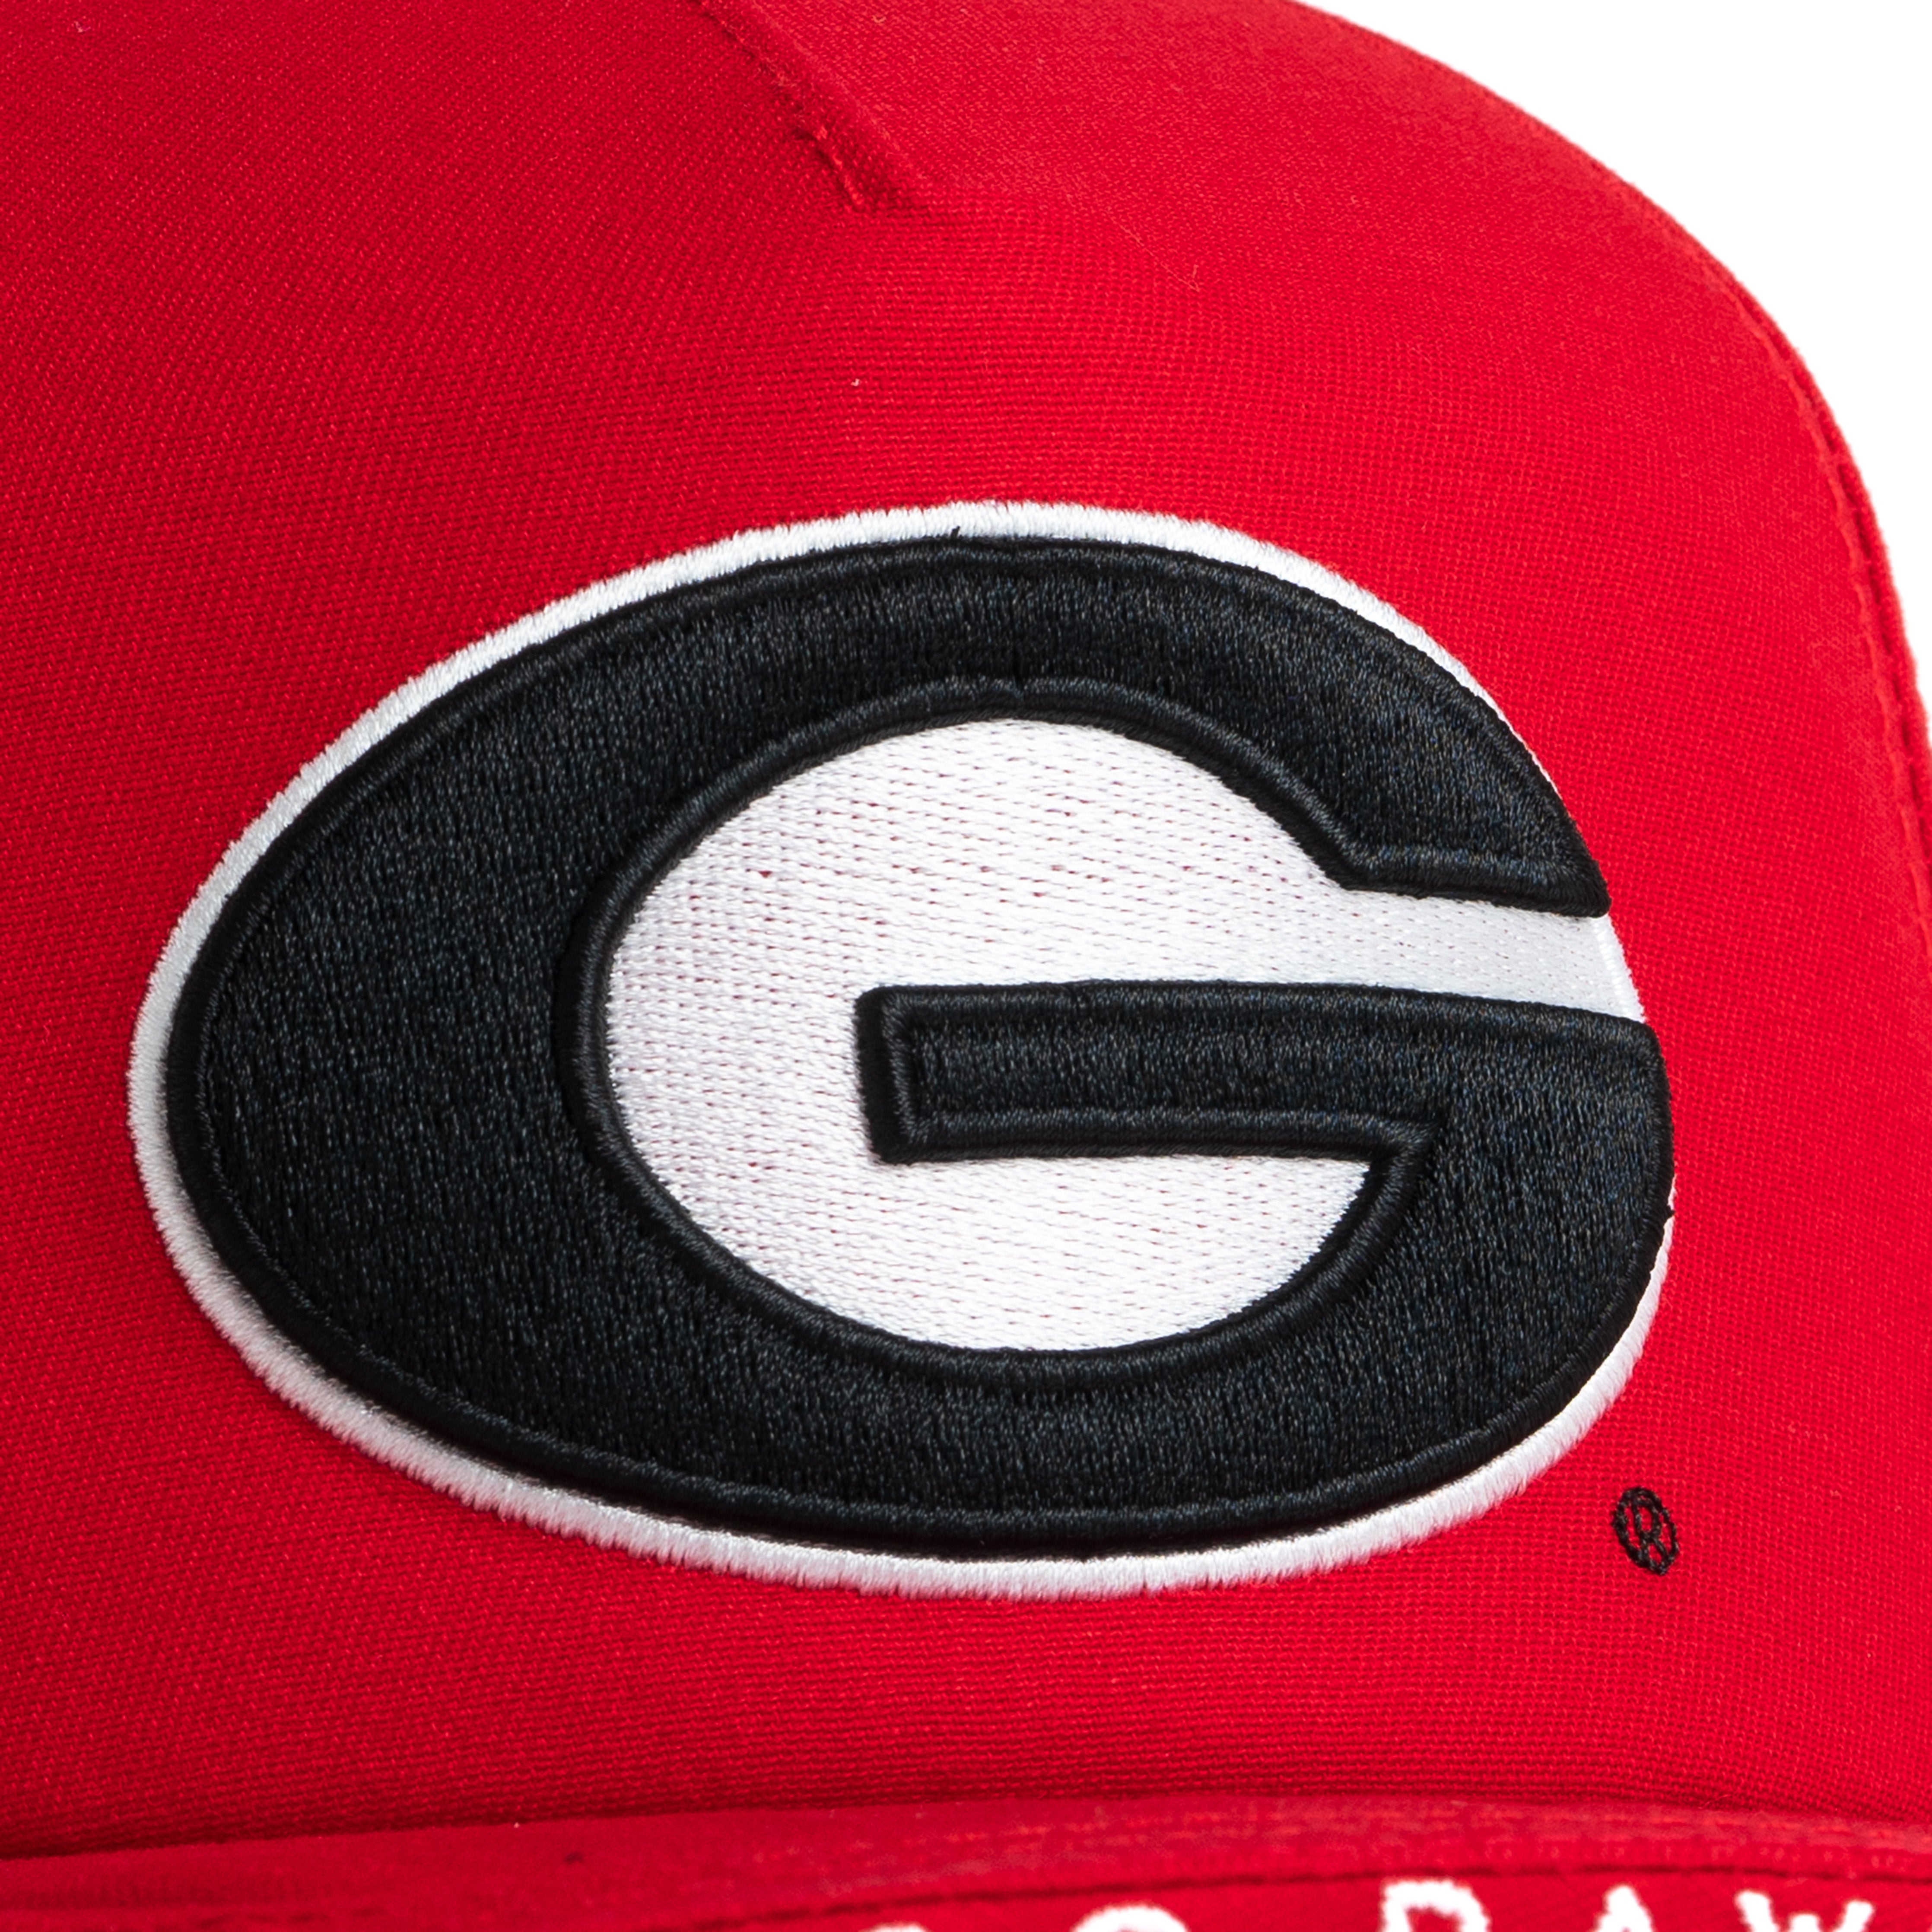 Nike Men's Georgia Bulldogs Black Fitted Baseball Hat, Size 7 1/2